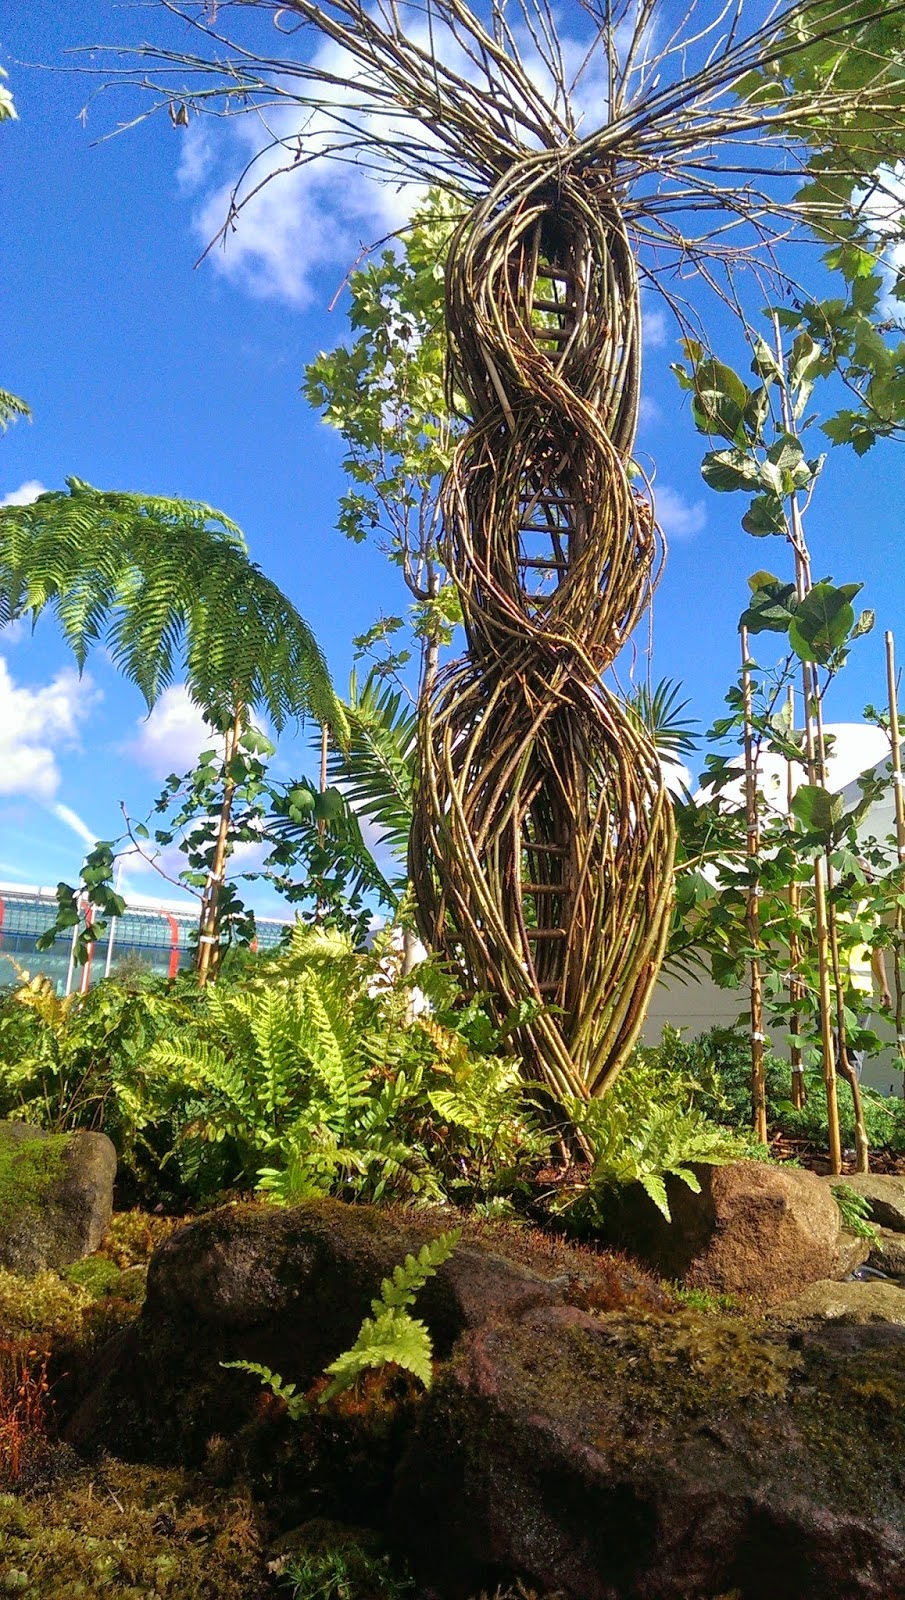 My sculpture for the birmingham botanical gardens